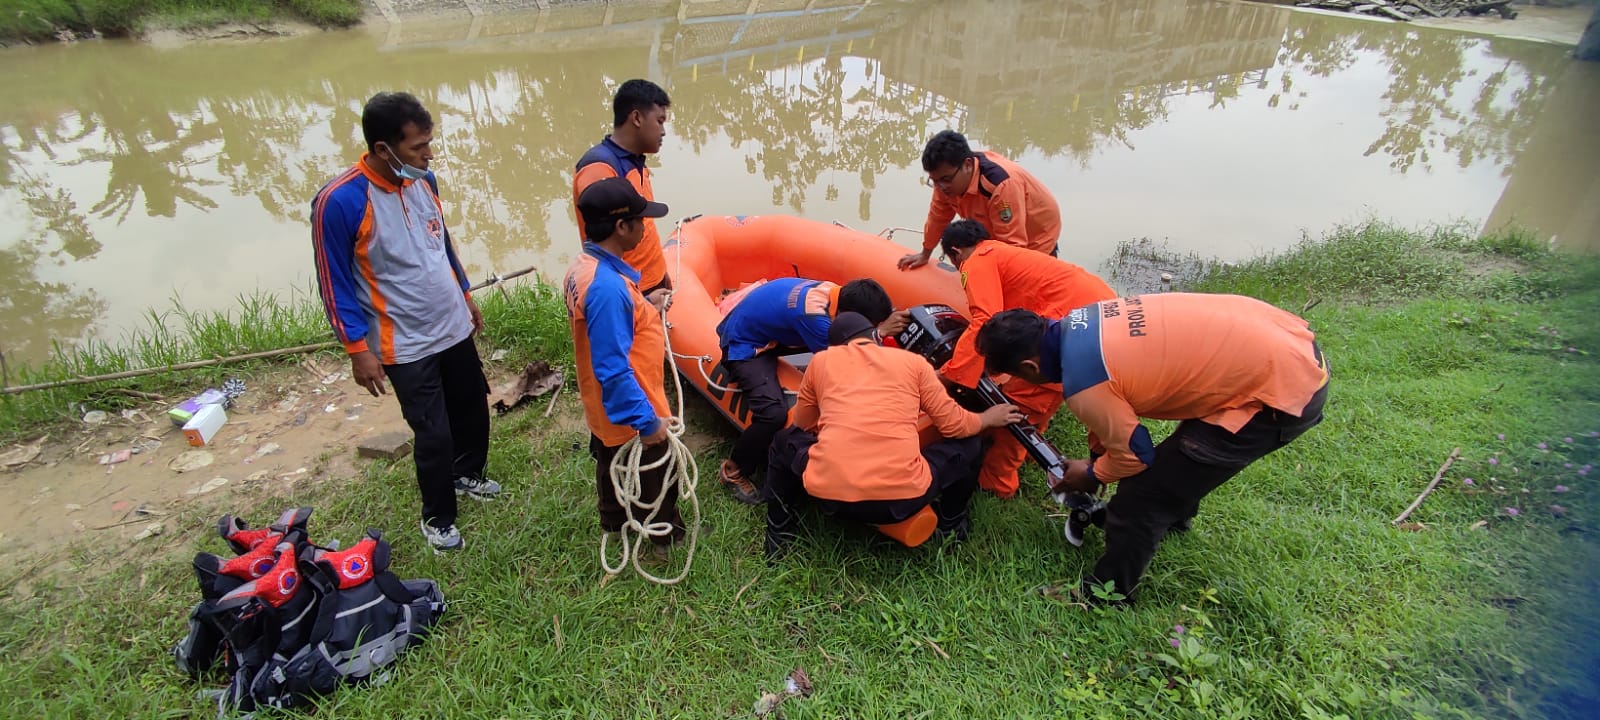 Sukiyem (53), warga Dukuh Gumiring, Desa Sidomulyo, Kecamatan Banjarejo, Blora ditemukan tewas tenggelam di Sungai Lusi pada Selasa (28/3) siang sekira pukul 10.25 WIB.